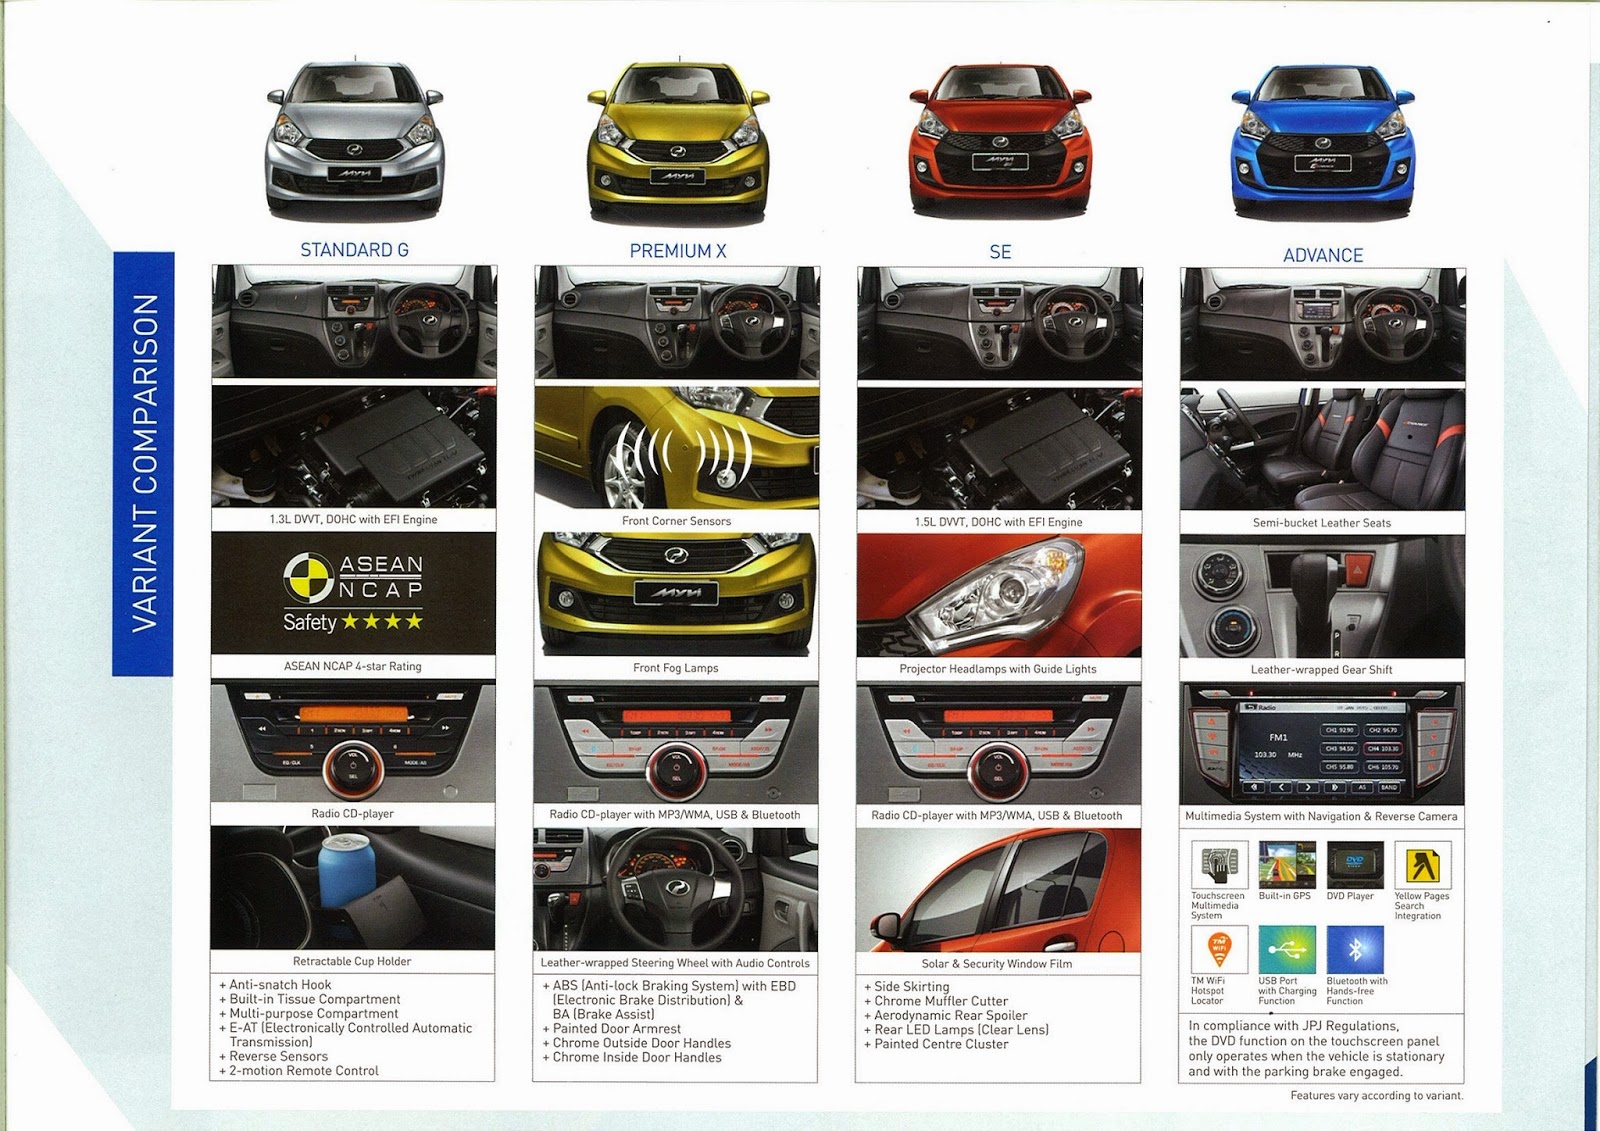 Promosi Perodua Baharu: The New Myvi 2015 and Pricelist